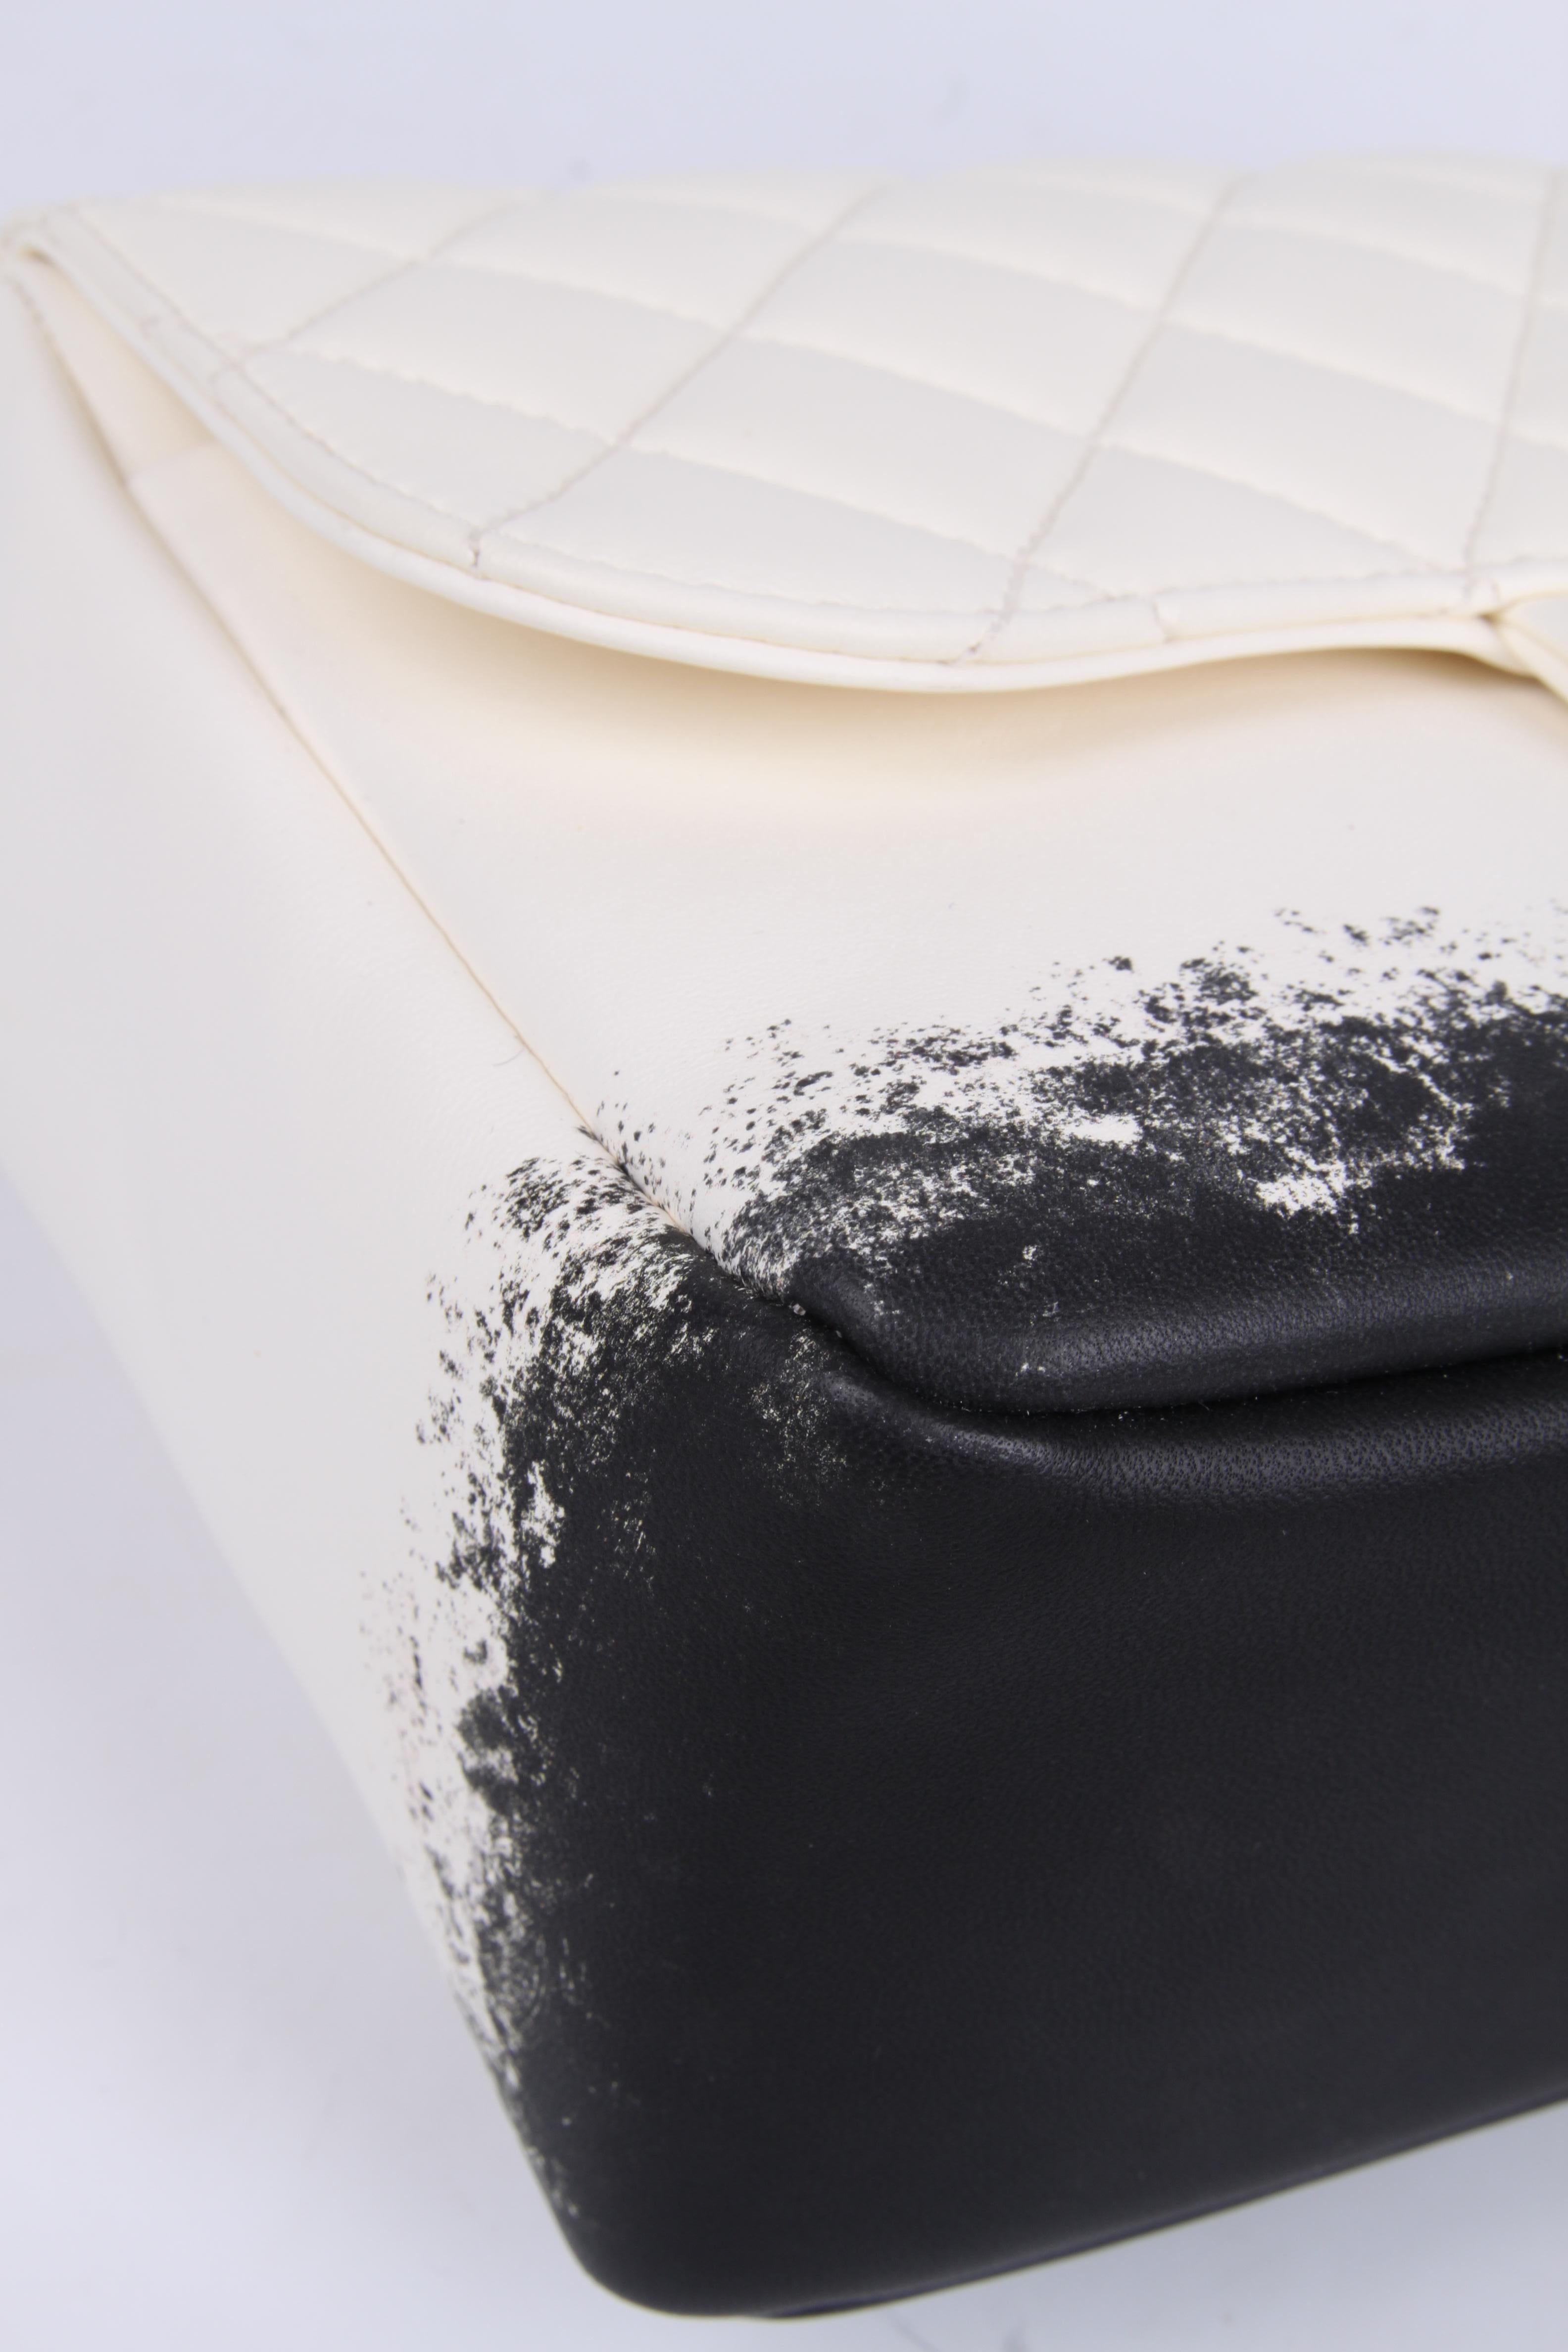 Chanel Classic Printed Lambskin Bag - black & white - NEW 2